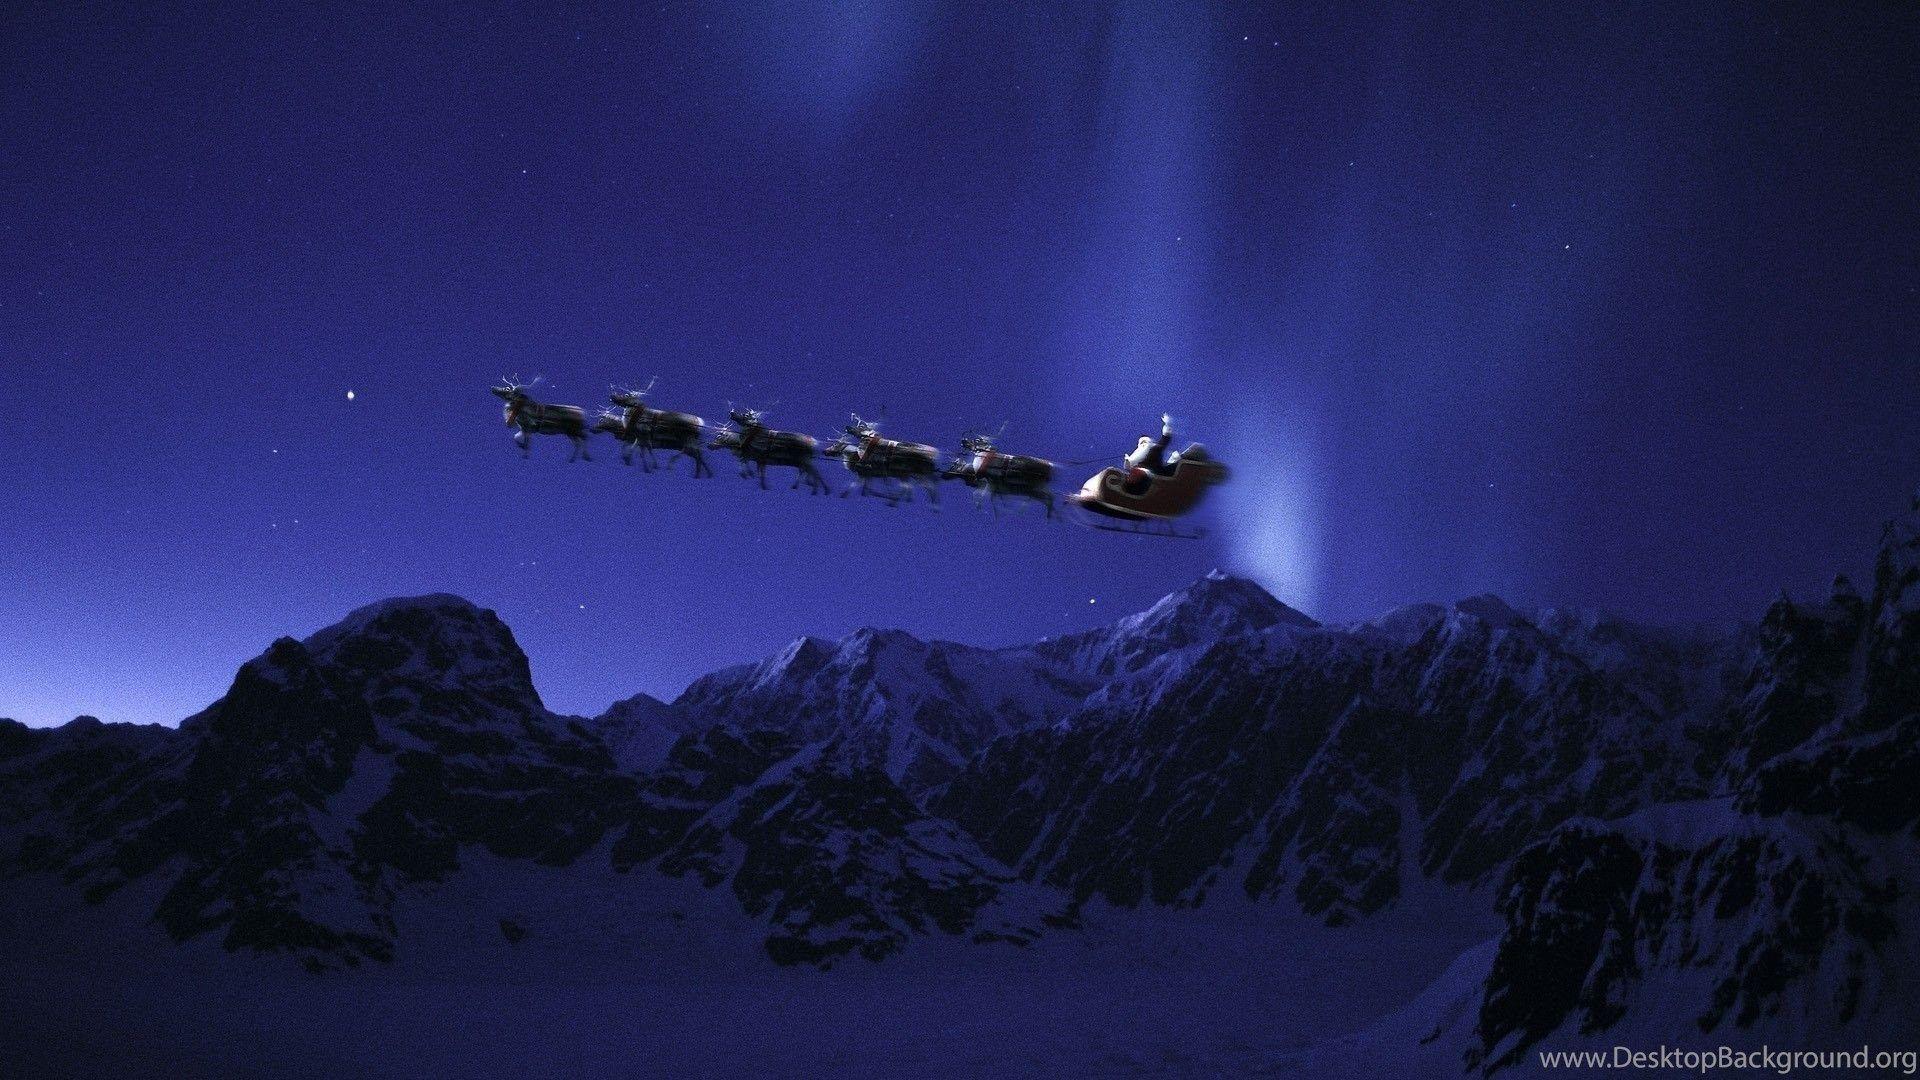 Santa's Sleigh In The Night Sky, Merry Christmas, Santa Claus